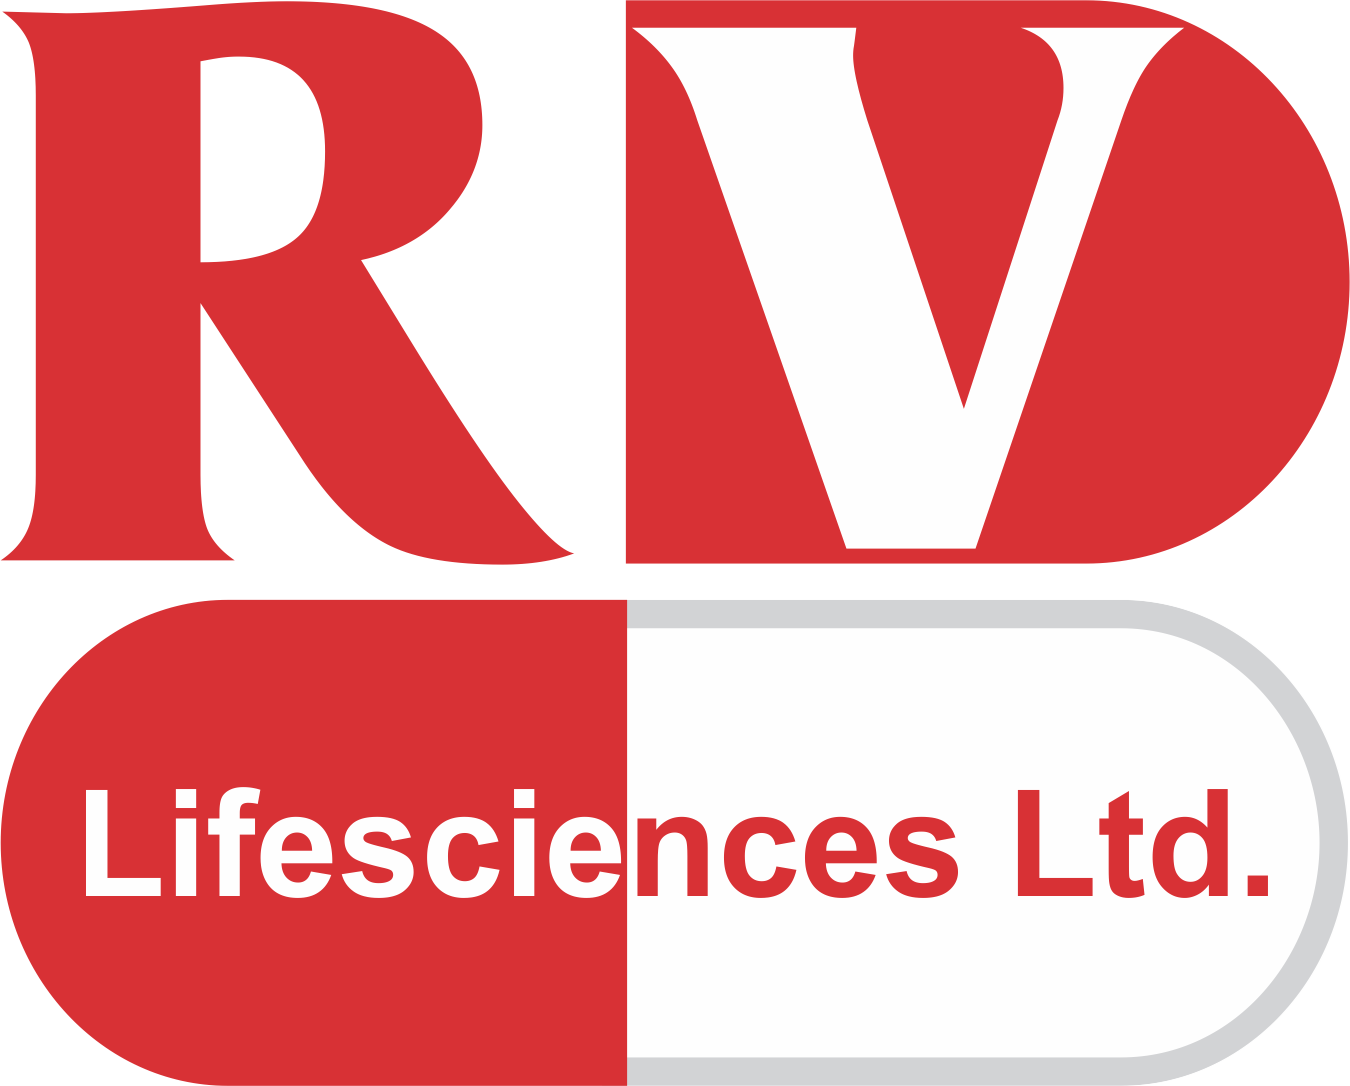 RV Lifesciences Ltd